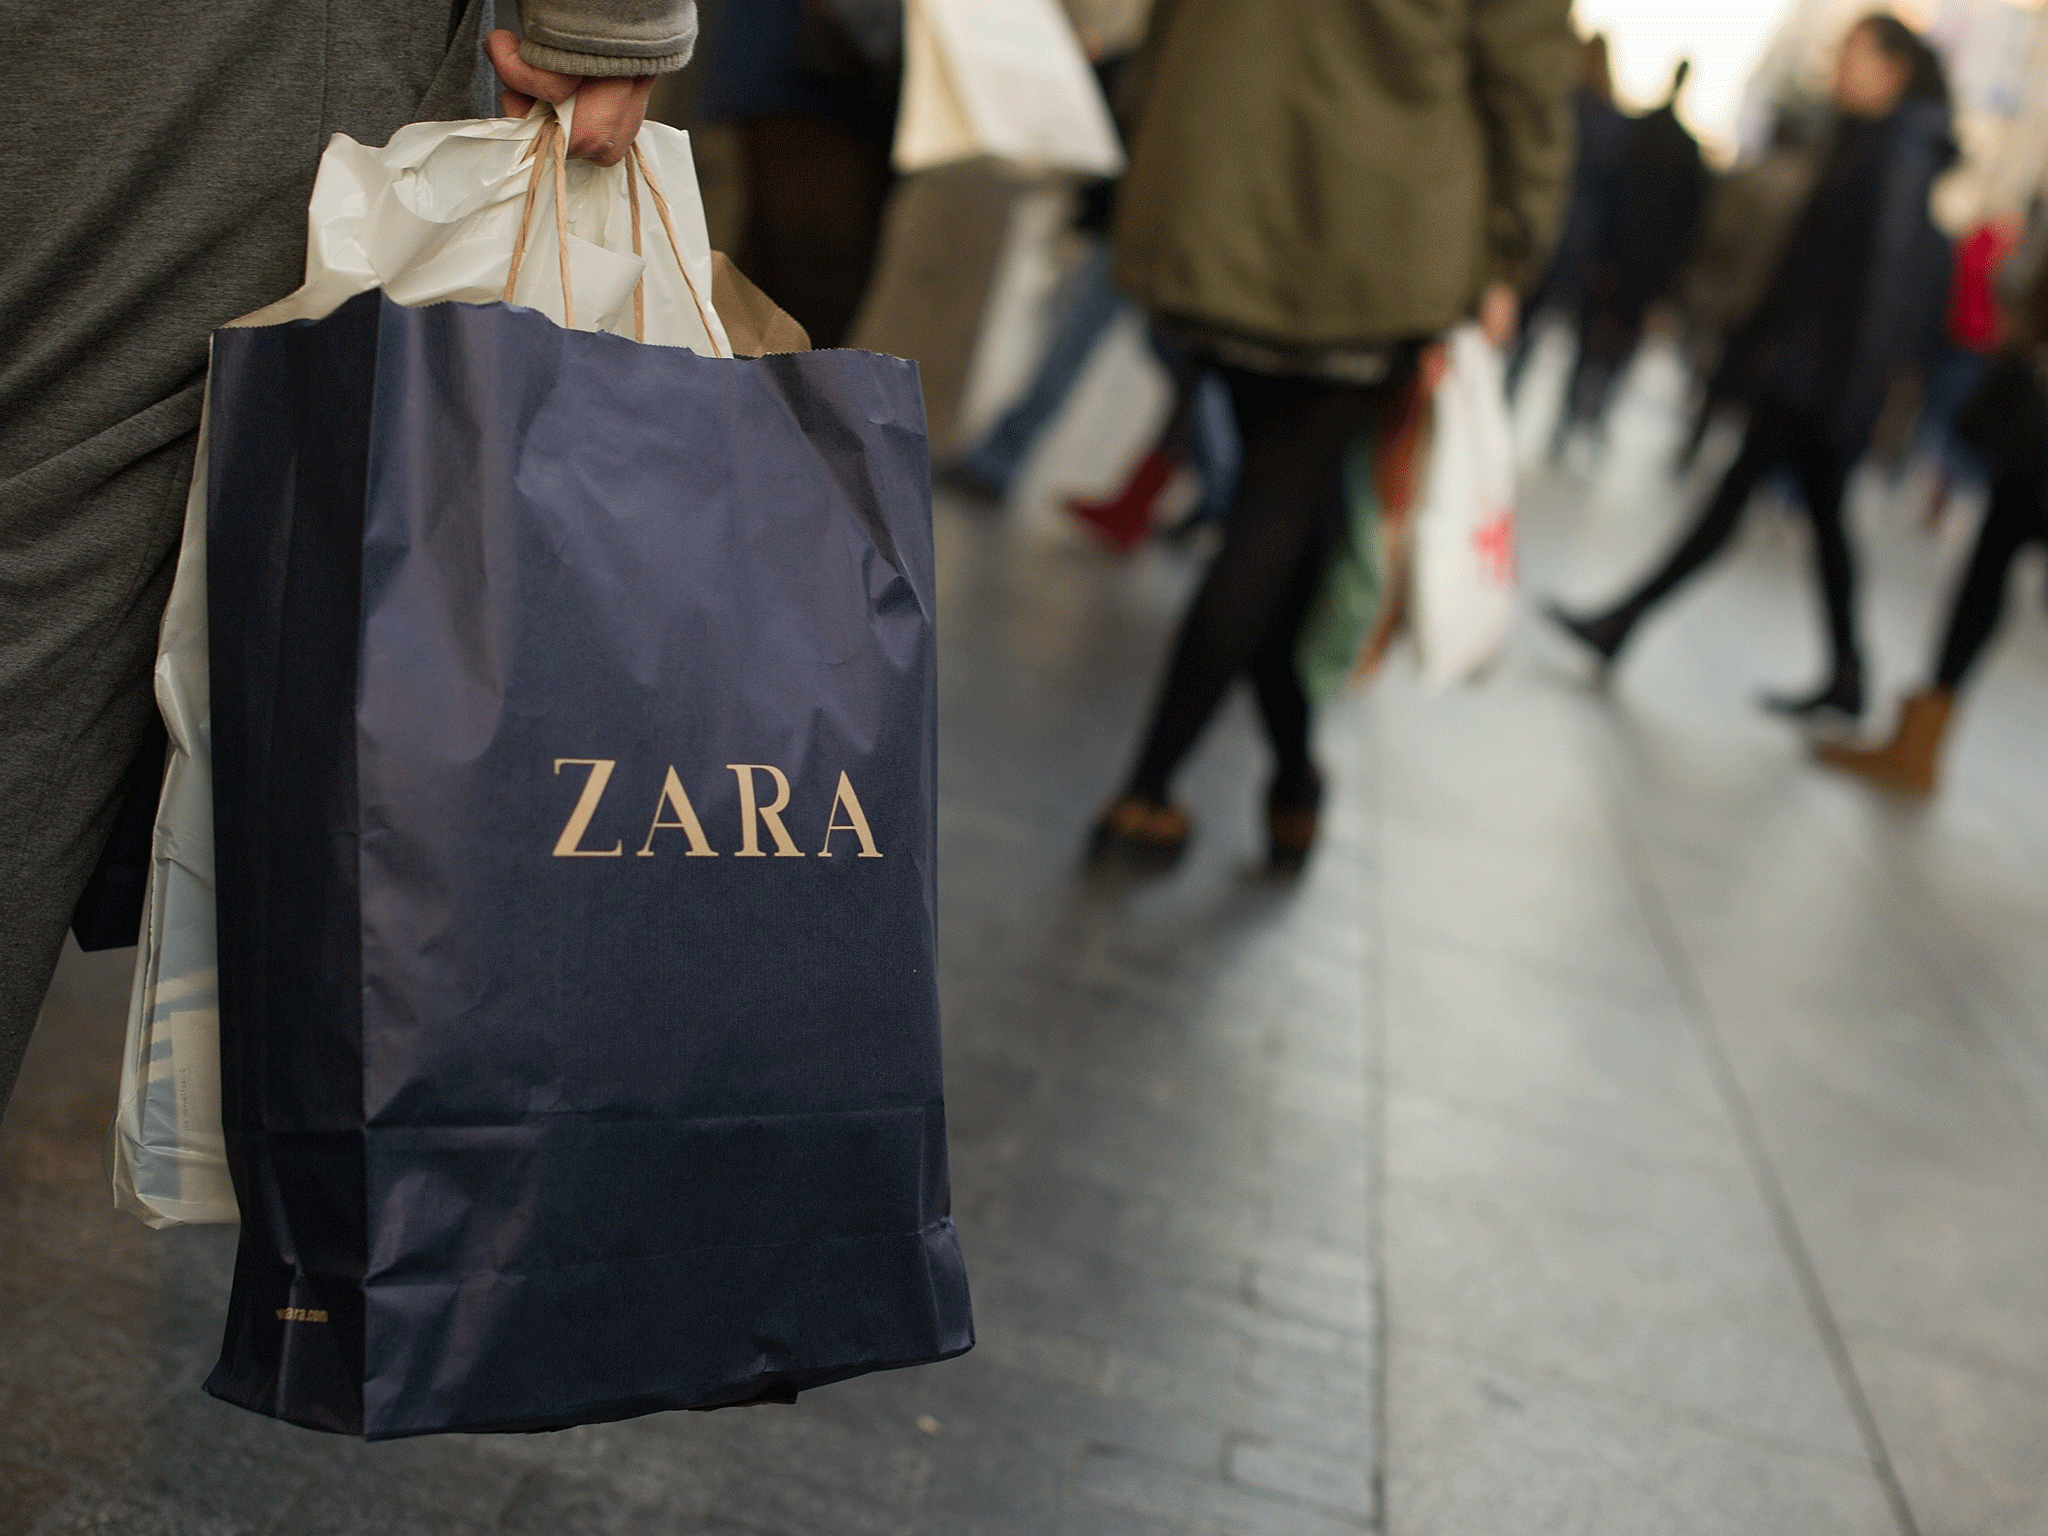 Zara’s parent company has enjoyed an 8 per cent profits boost